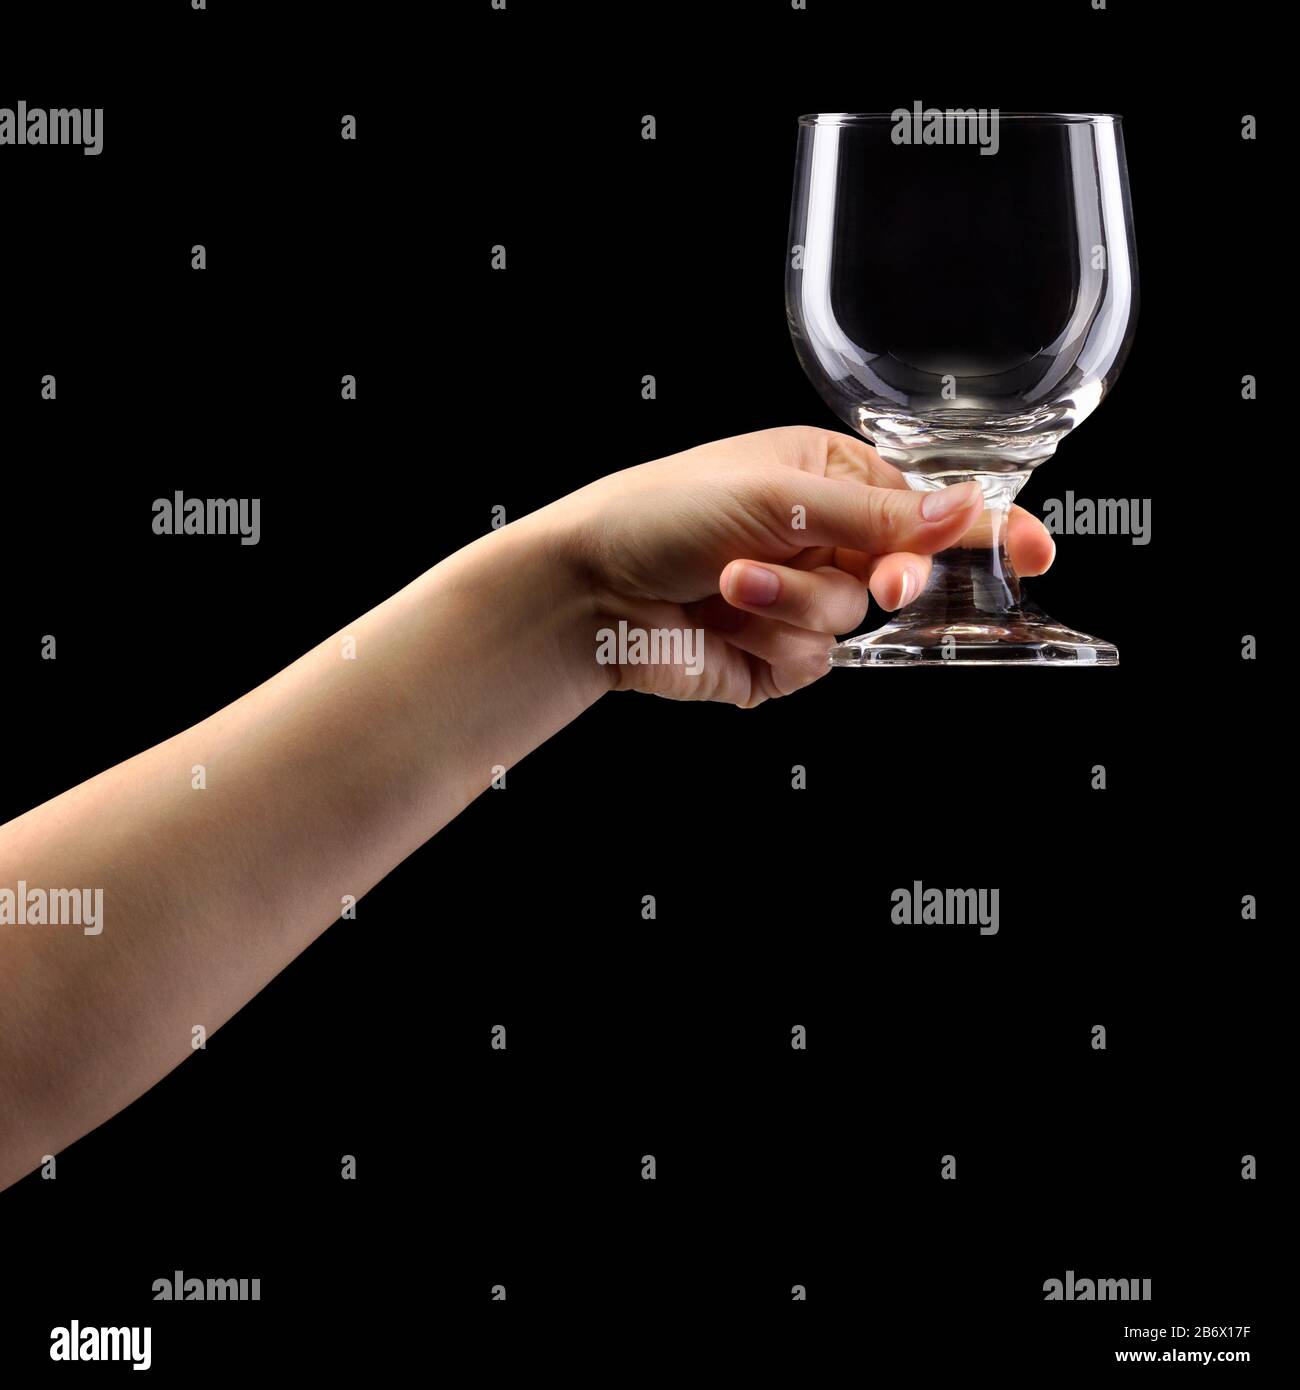 https://c8.alamy.com/comp/2B6X17F/woman-hand-holding-empty-beer-glass-isolated-on-black-2B6X17F.jpg